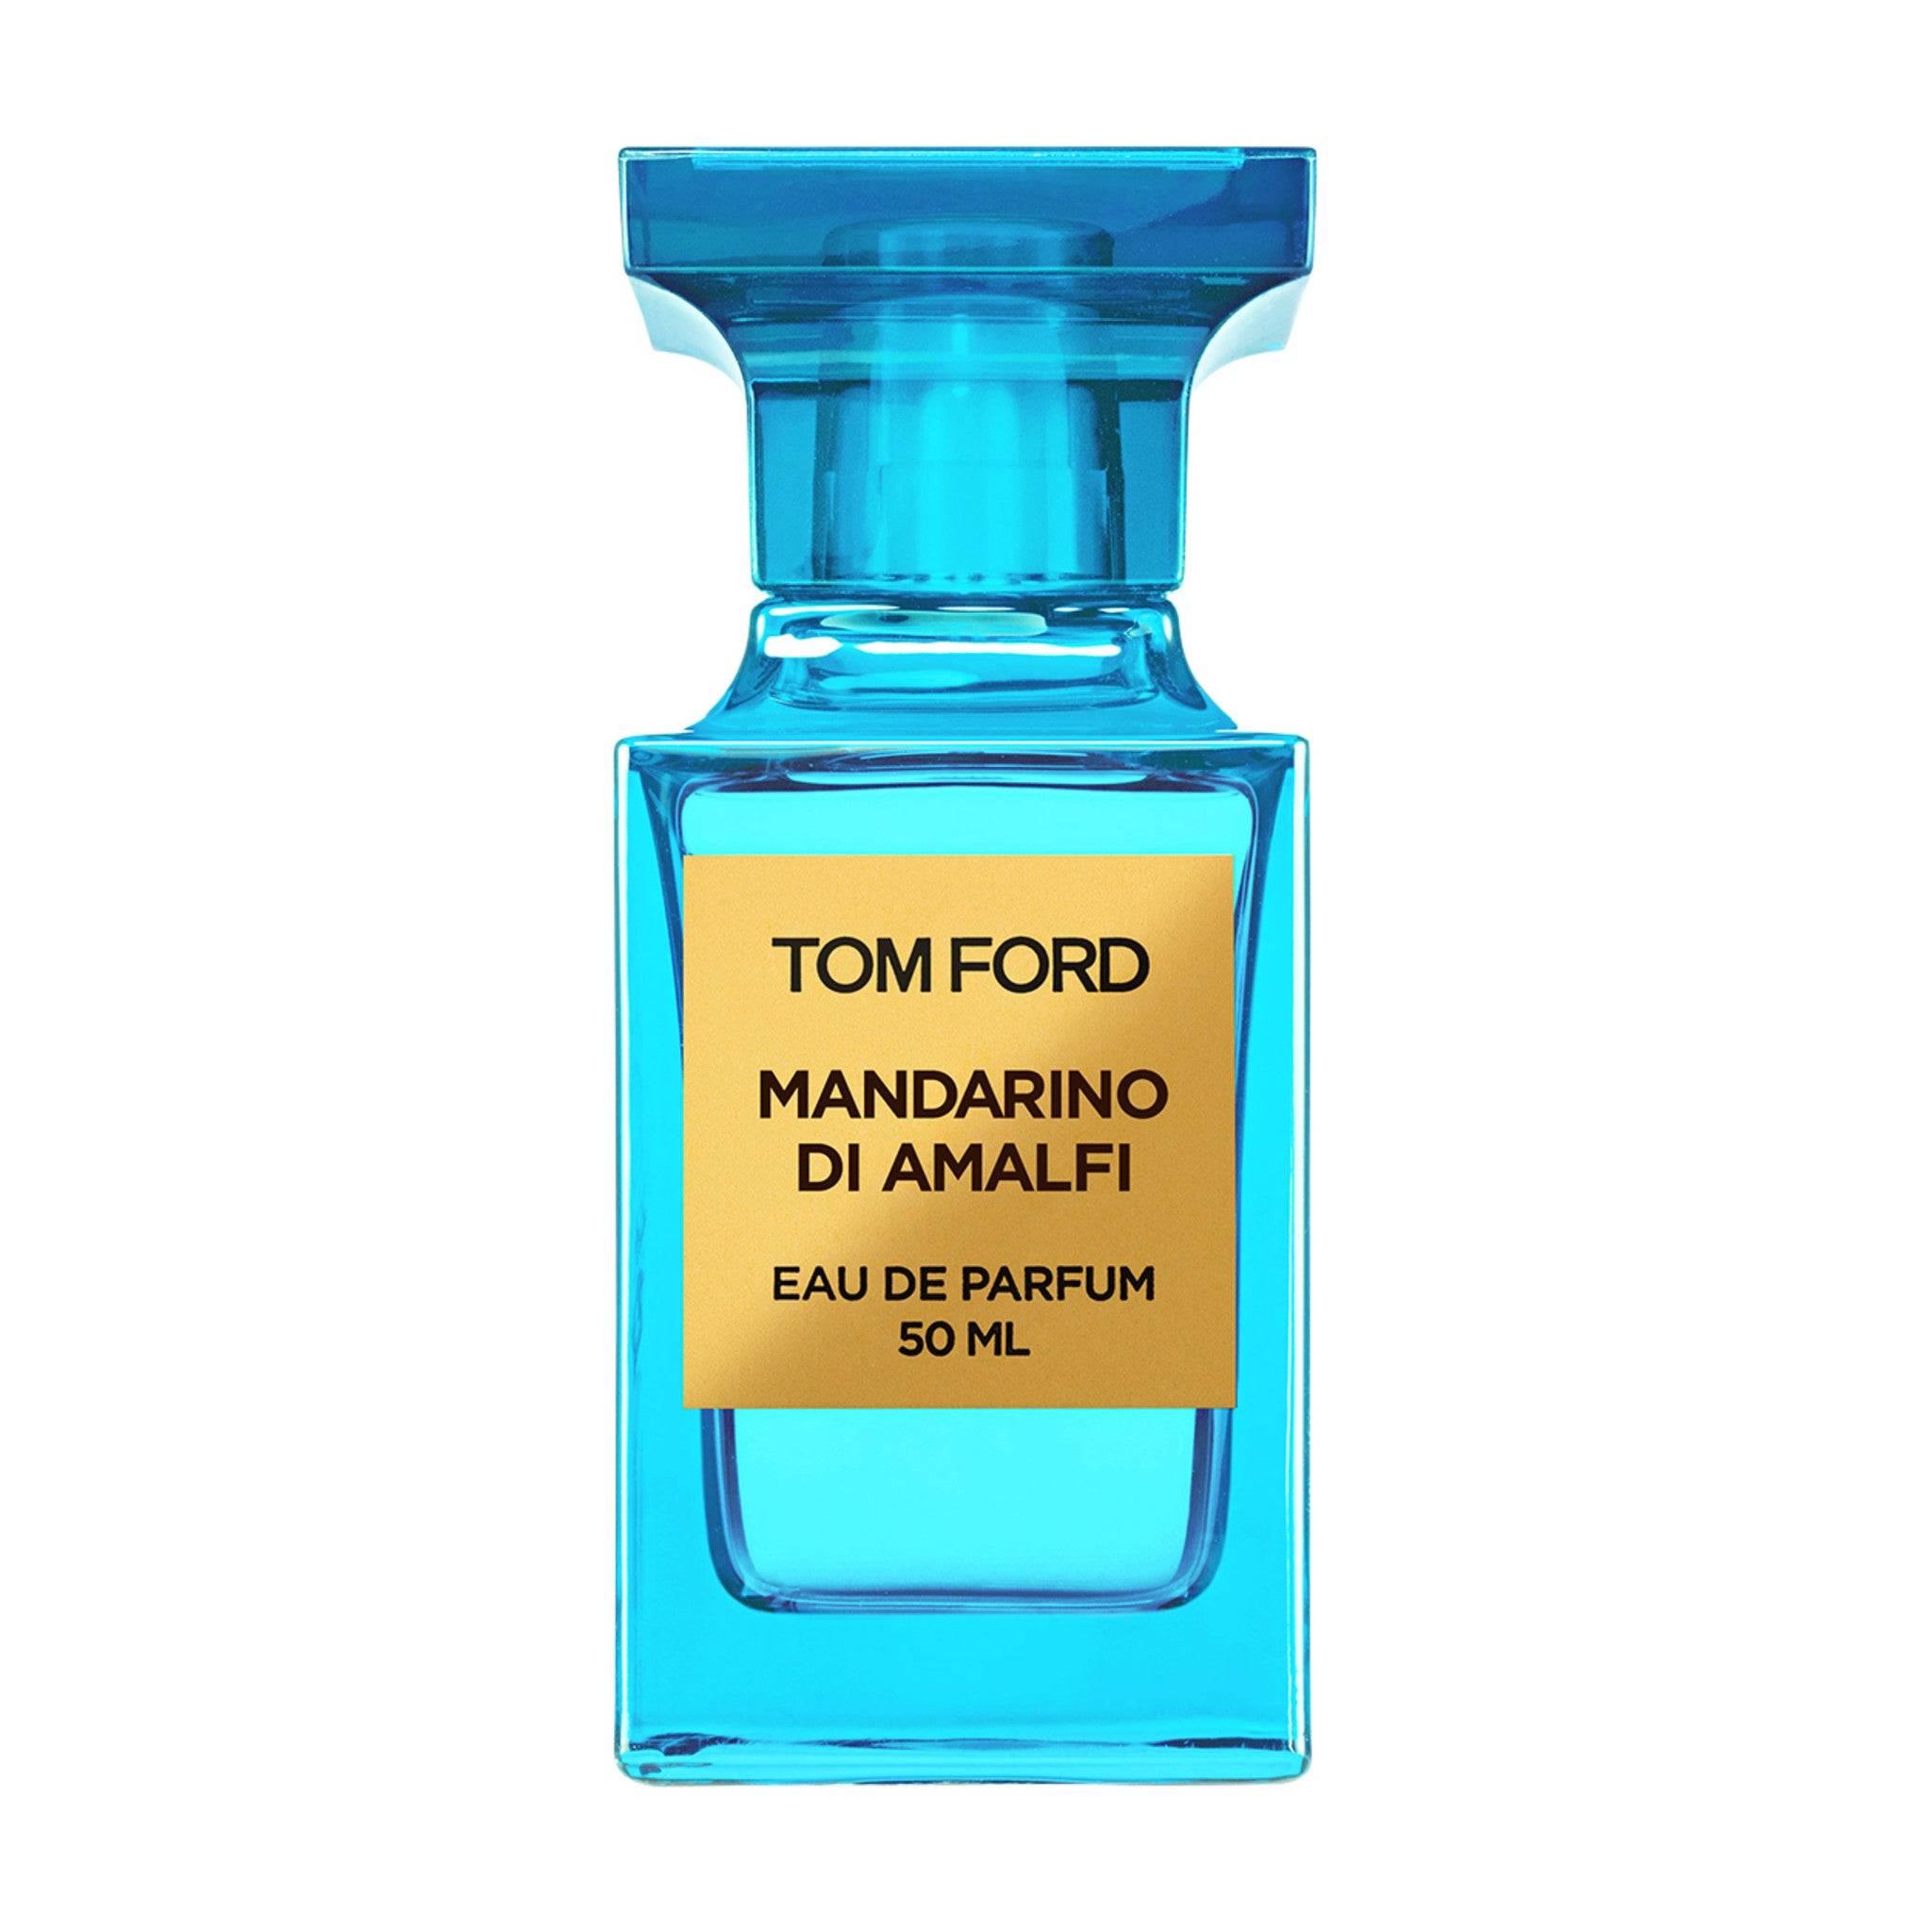 Tom Ford Mandarino Di Amalfi Eau de Parfum Spray Size variant: 50 ml main image.